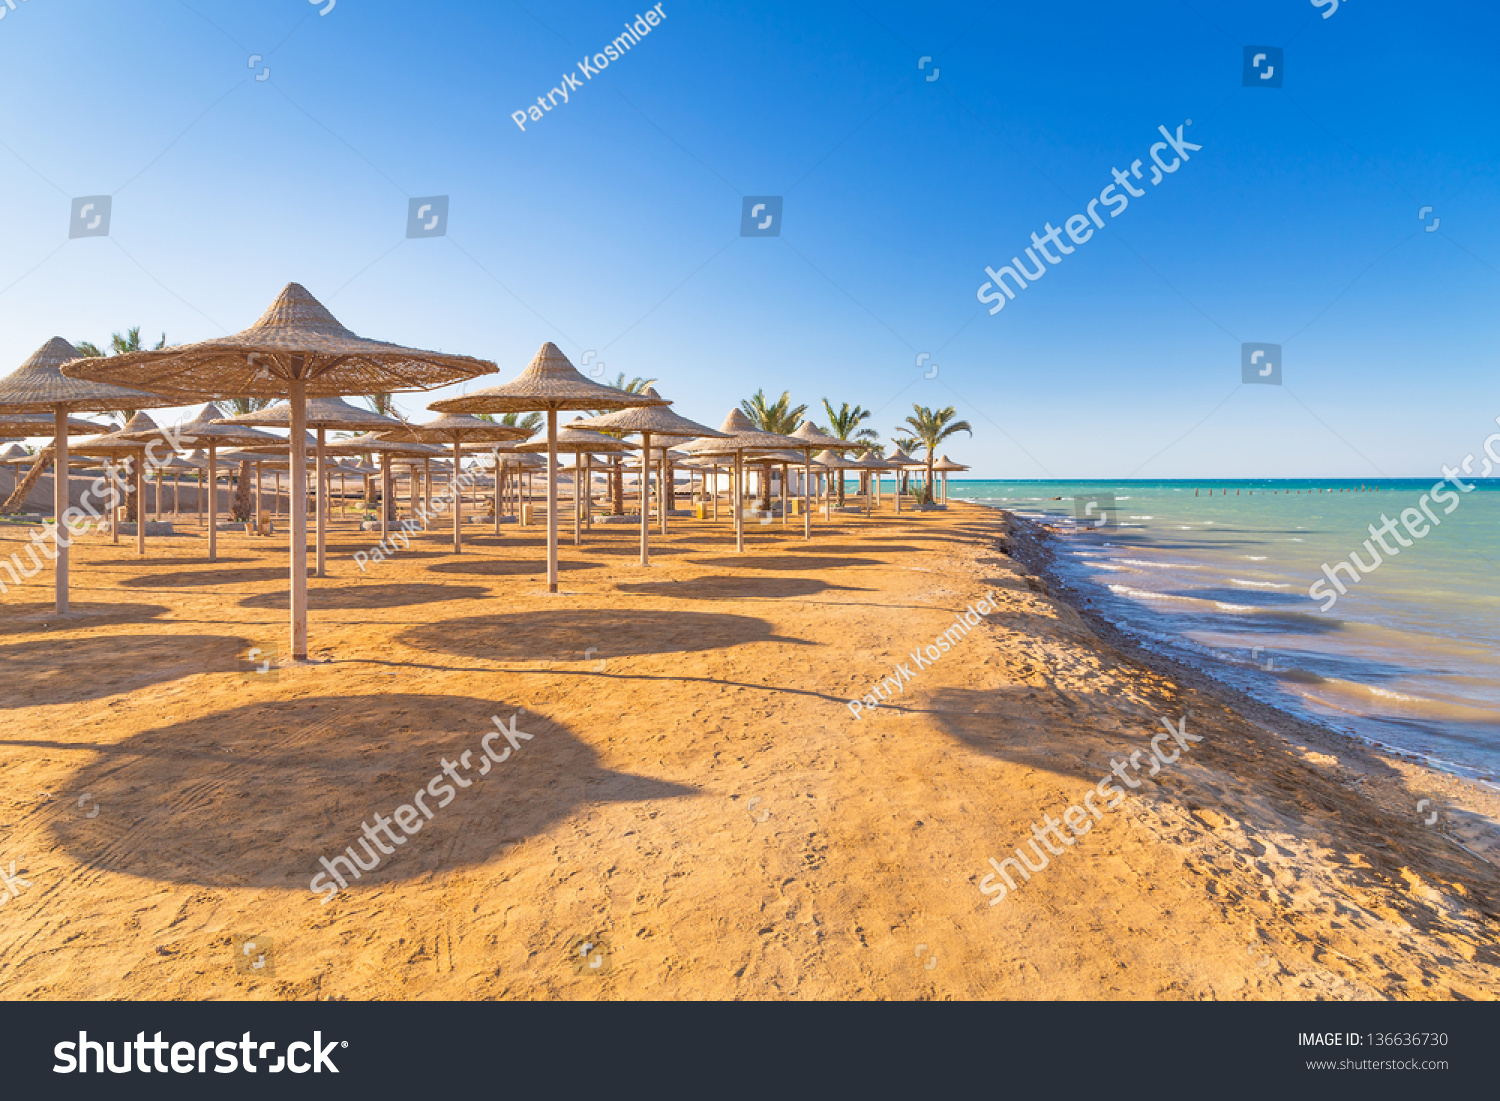 Egyptian Parasols On Beach Red Sea Stock Photo 136636730 | Shutterstock